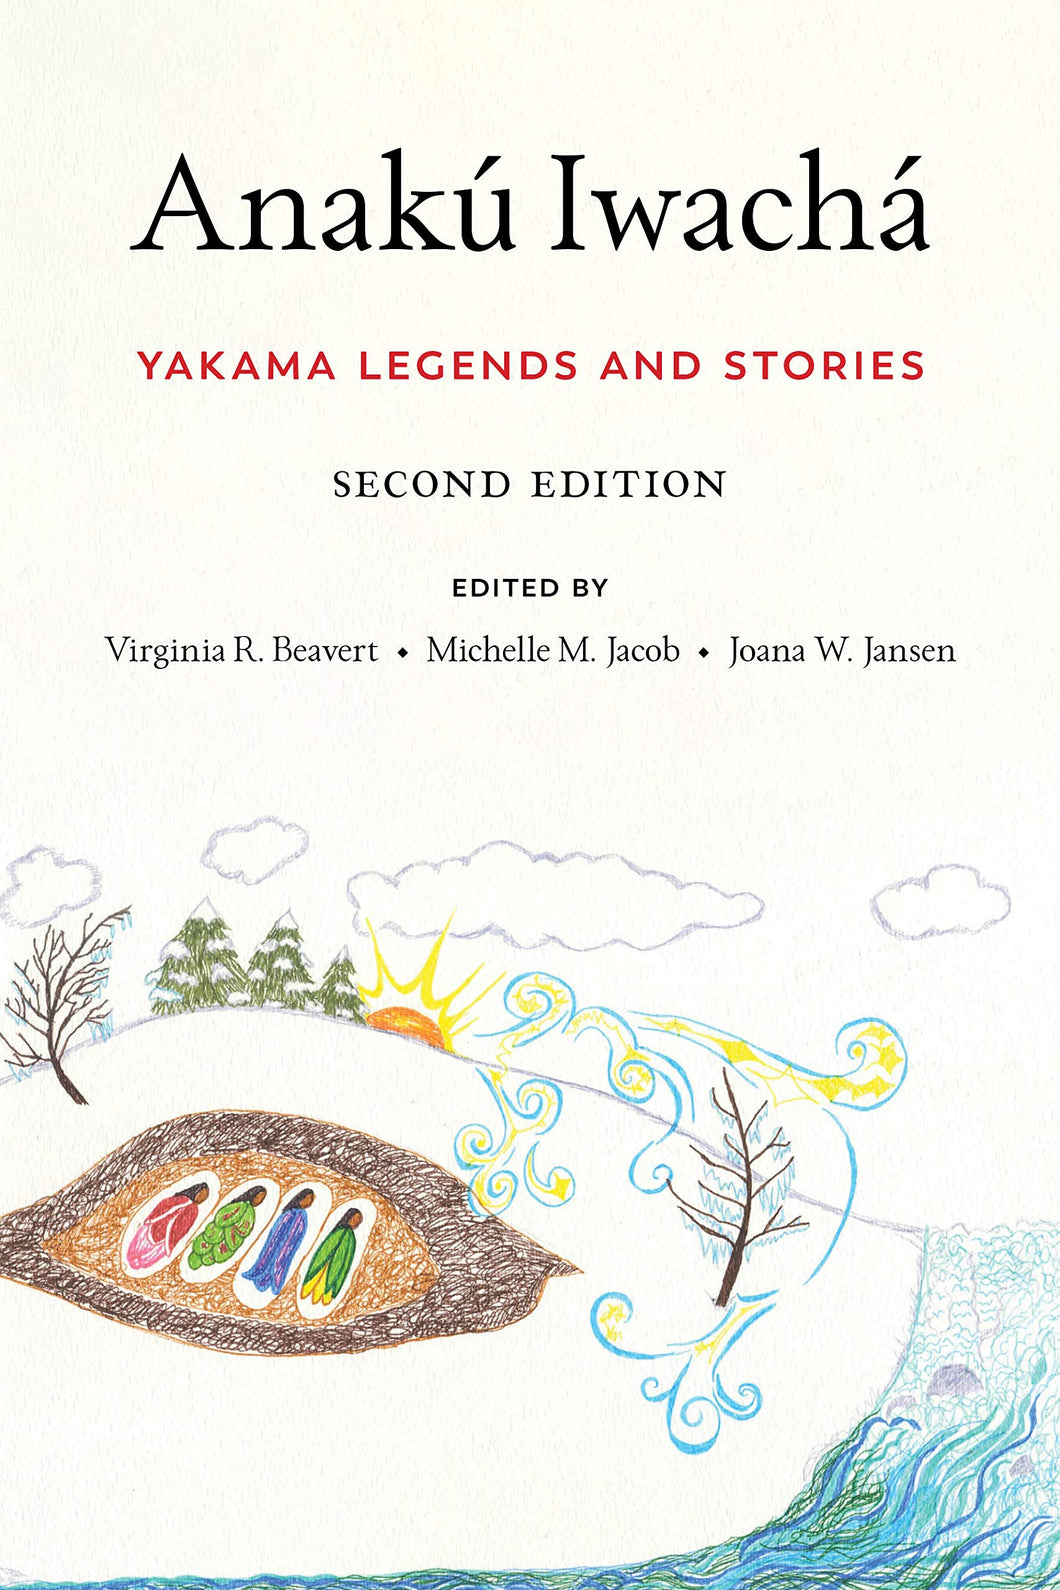 Anakú Iwachá: Yakama Legends and Stories